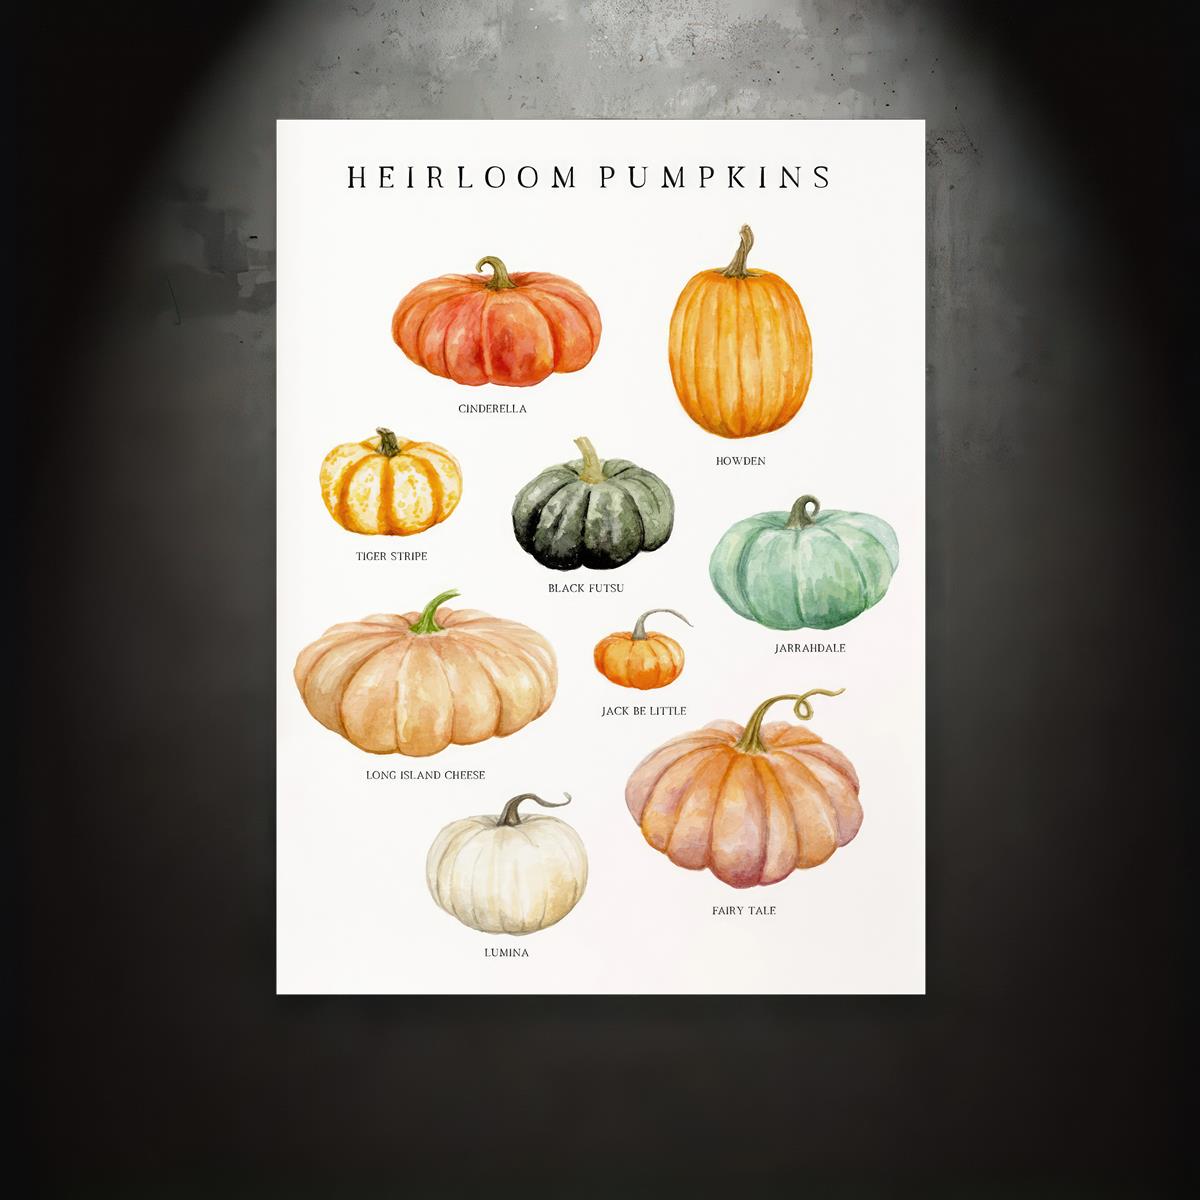 Canvas Painting, Watercolor Pumpkin Print Fall Harvest Art Poster